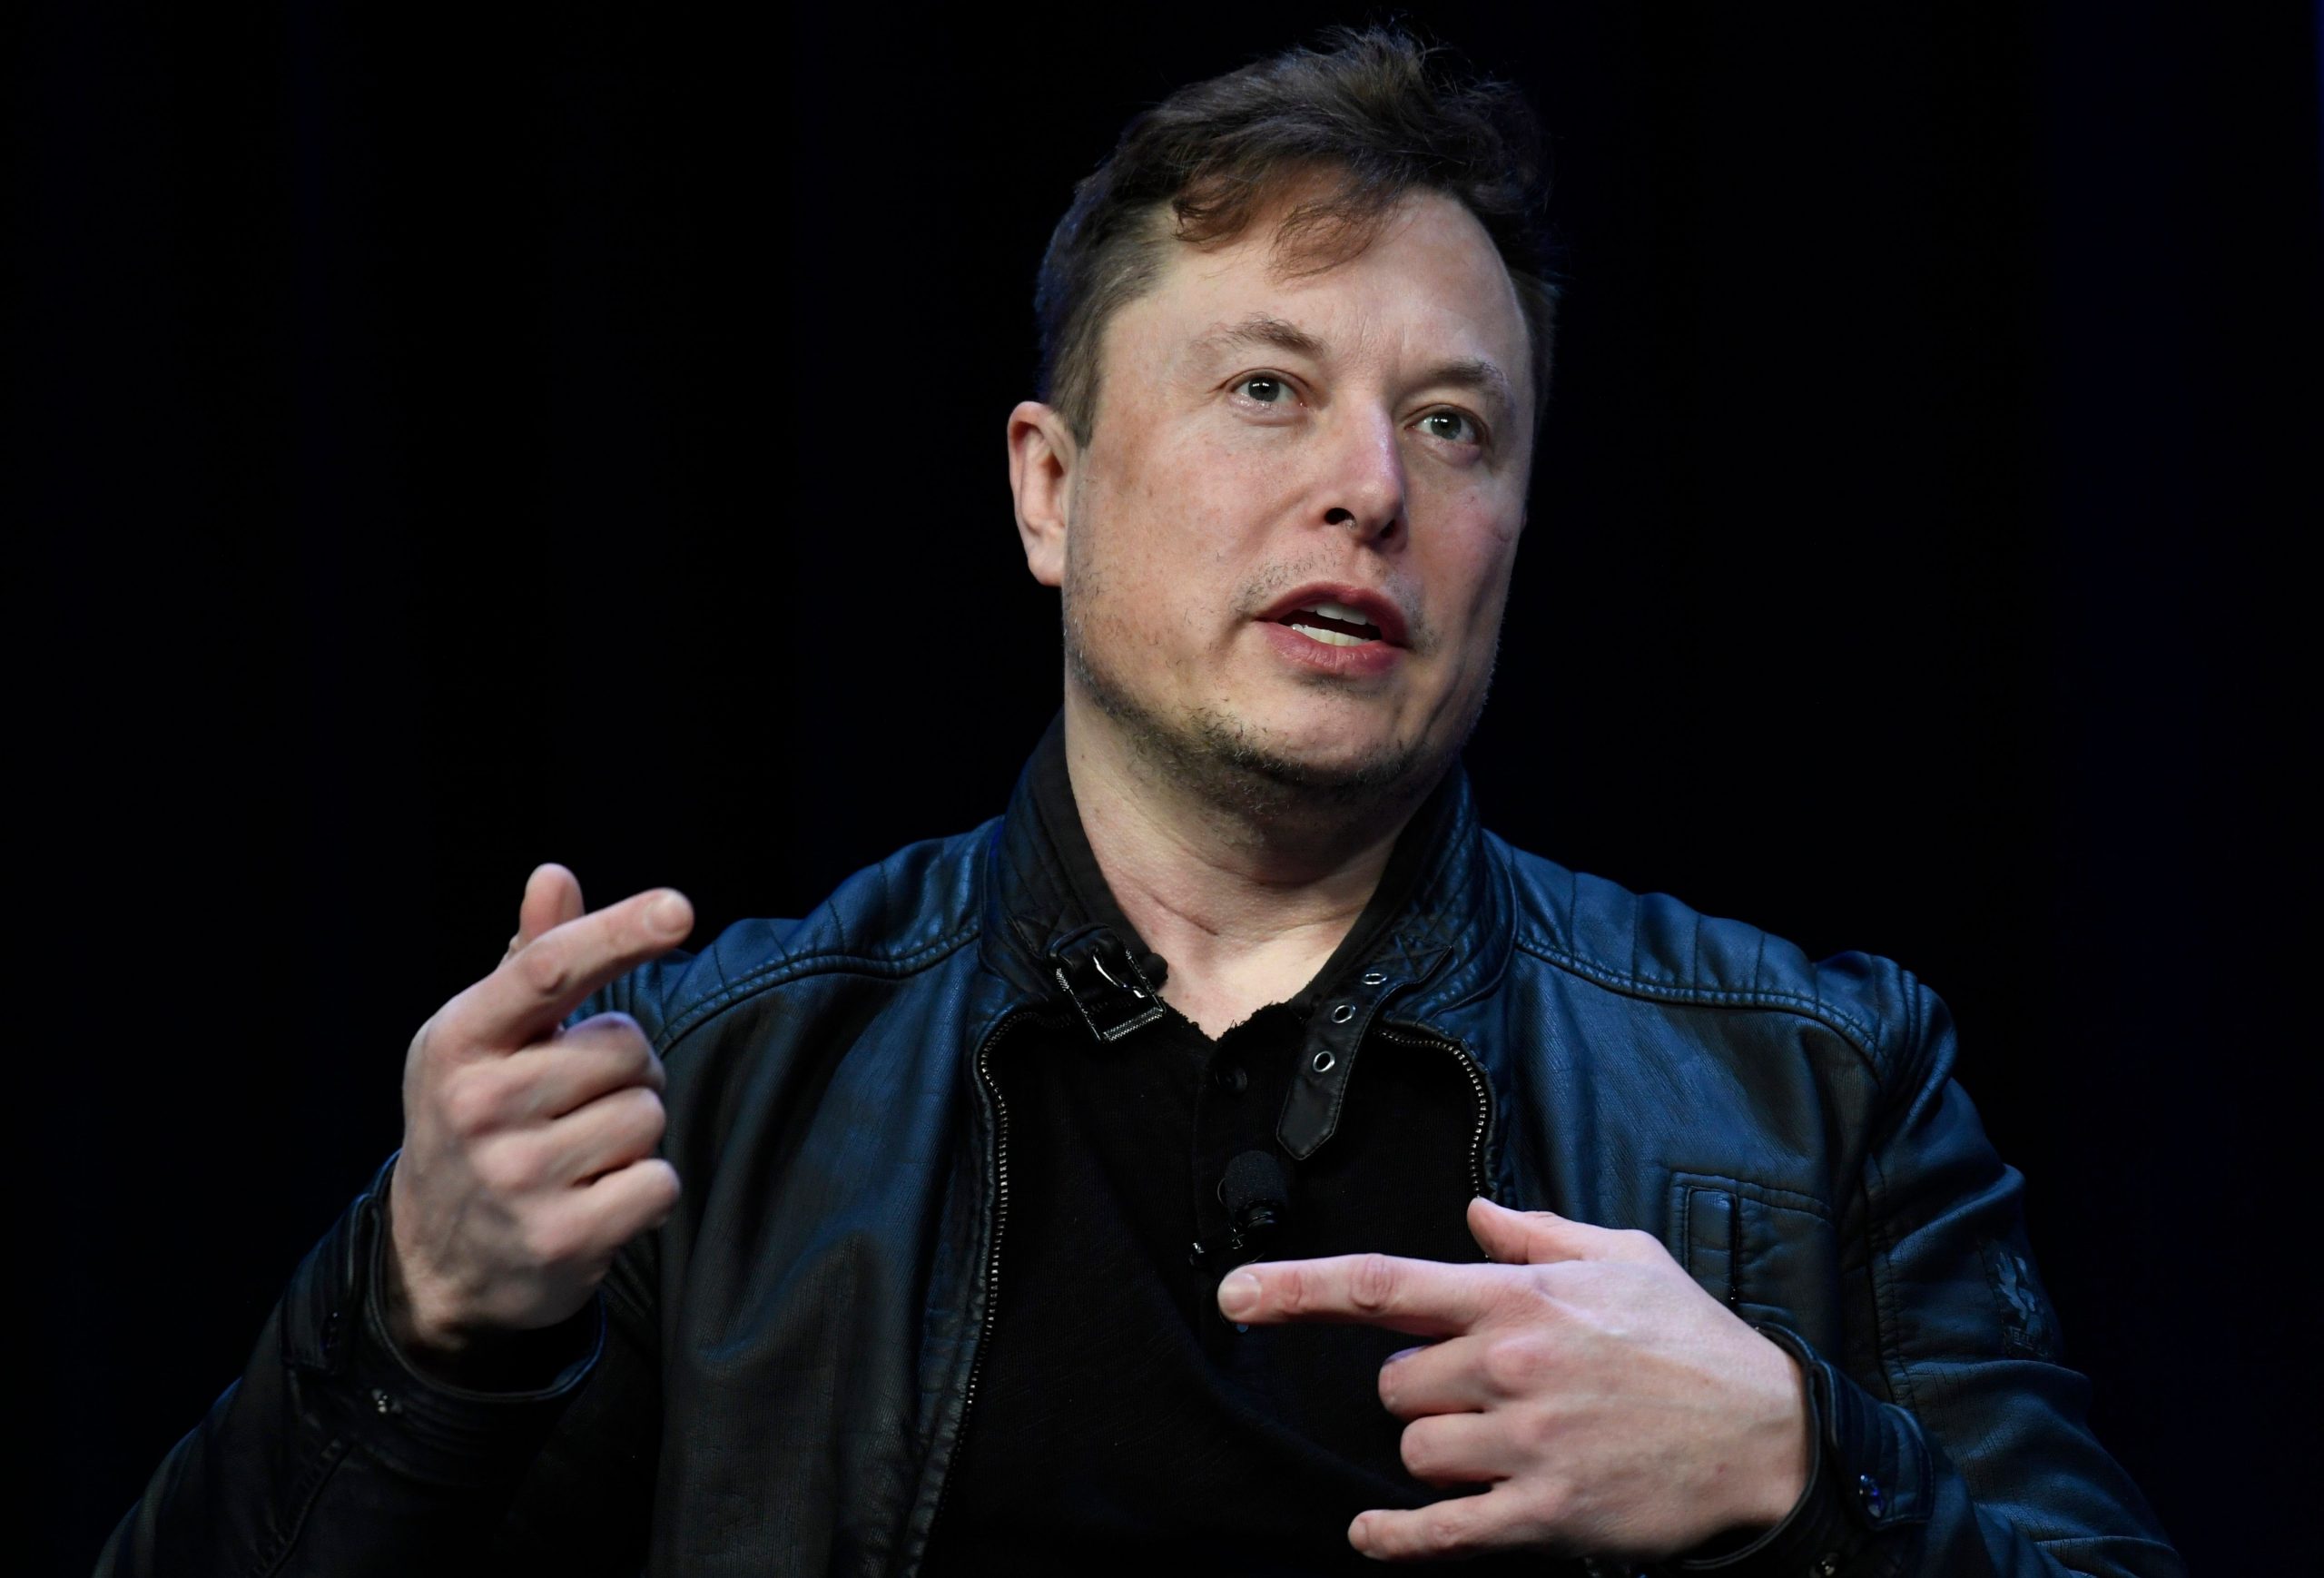 Elon Musk says skills at making enemies improving, amid affair scandal